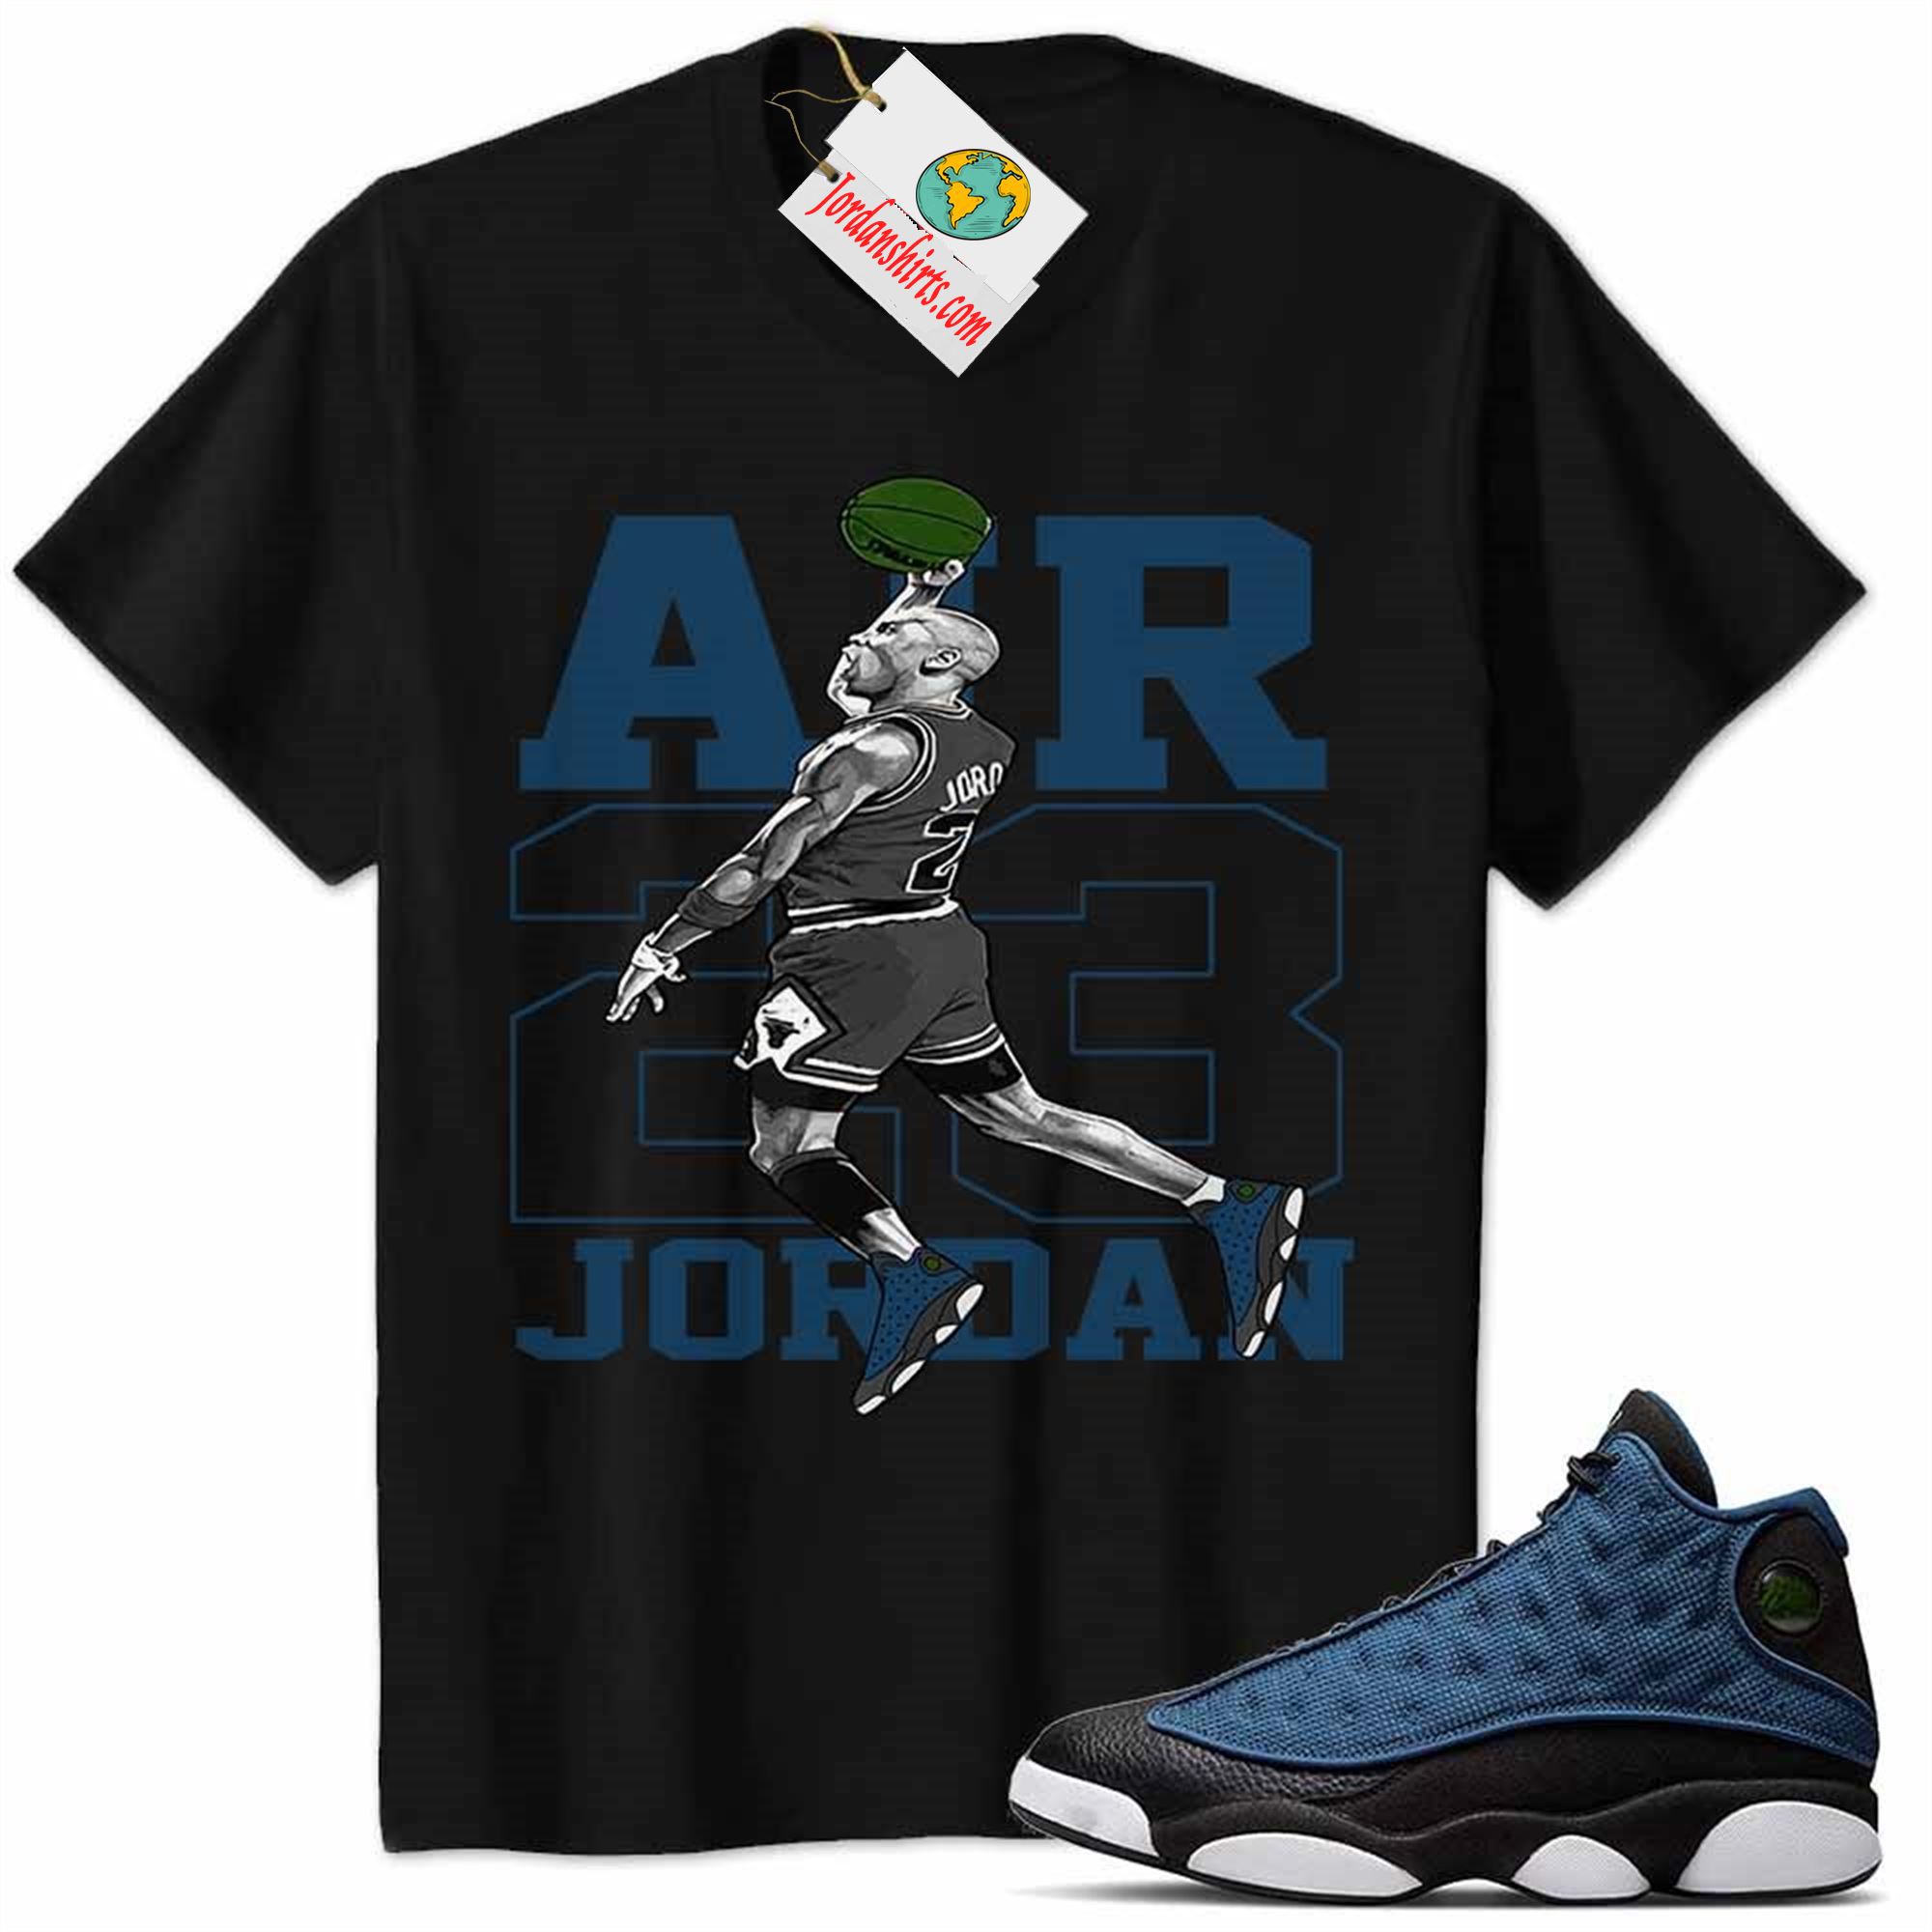 Jordan 13 Shirt, Jordan 13 Brave Blue Shirt Shirt Michael Jordan No 23 Dunk Black Plus Size Up To 5xl